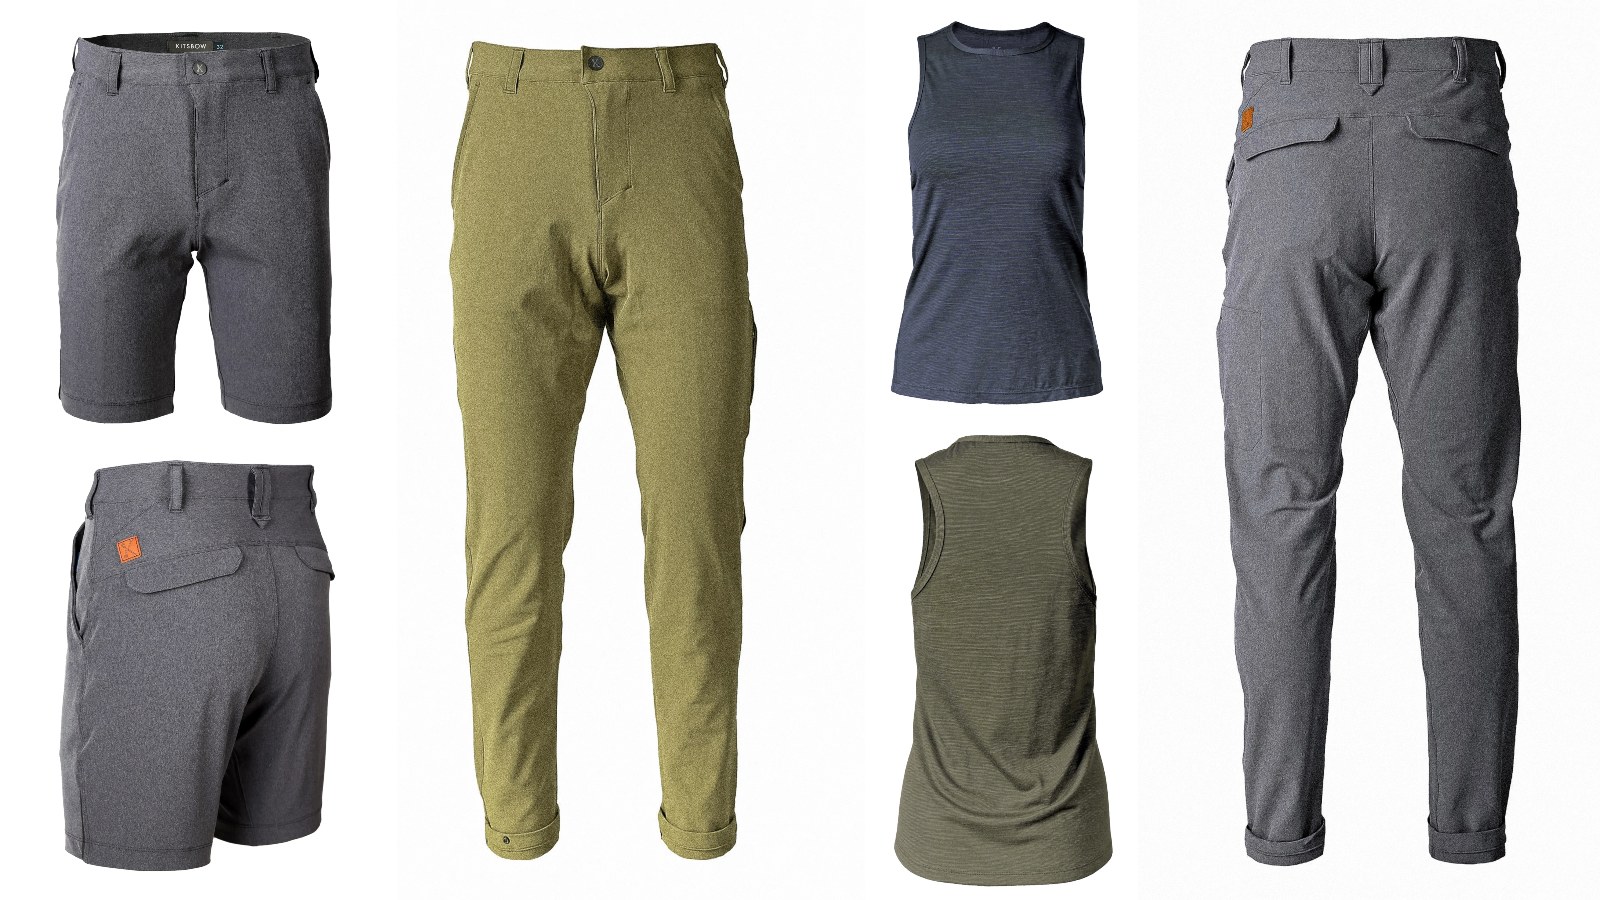 Kitsbow drops 'Lighterweight' shorts and pants, plus new Merino tank